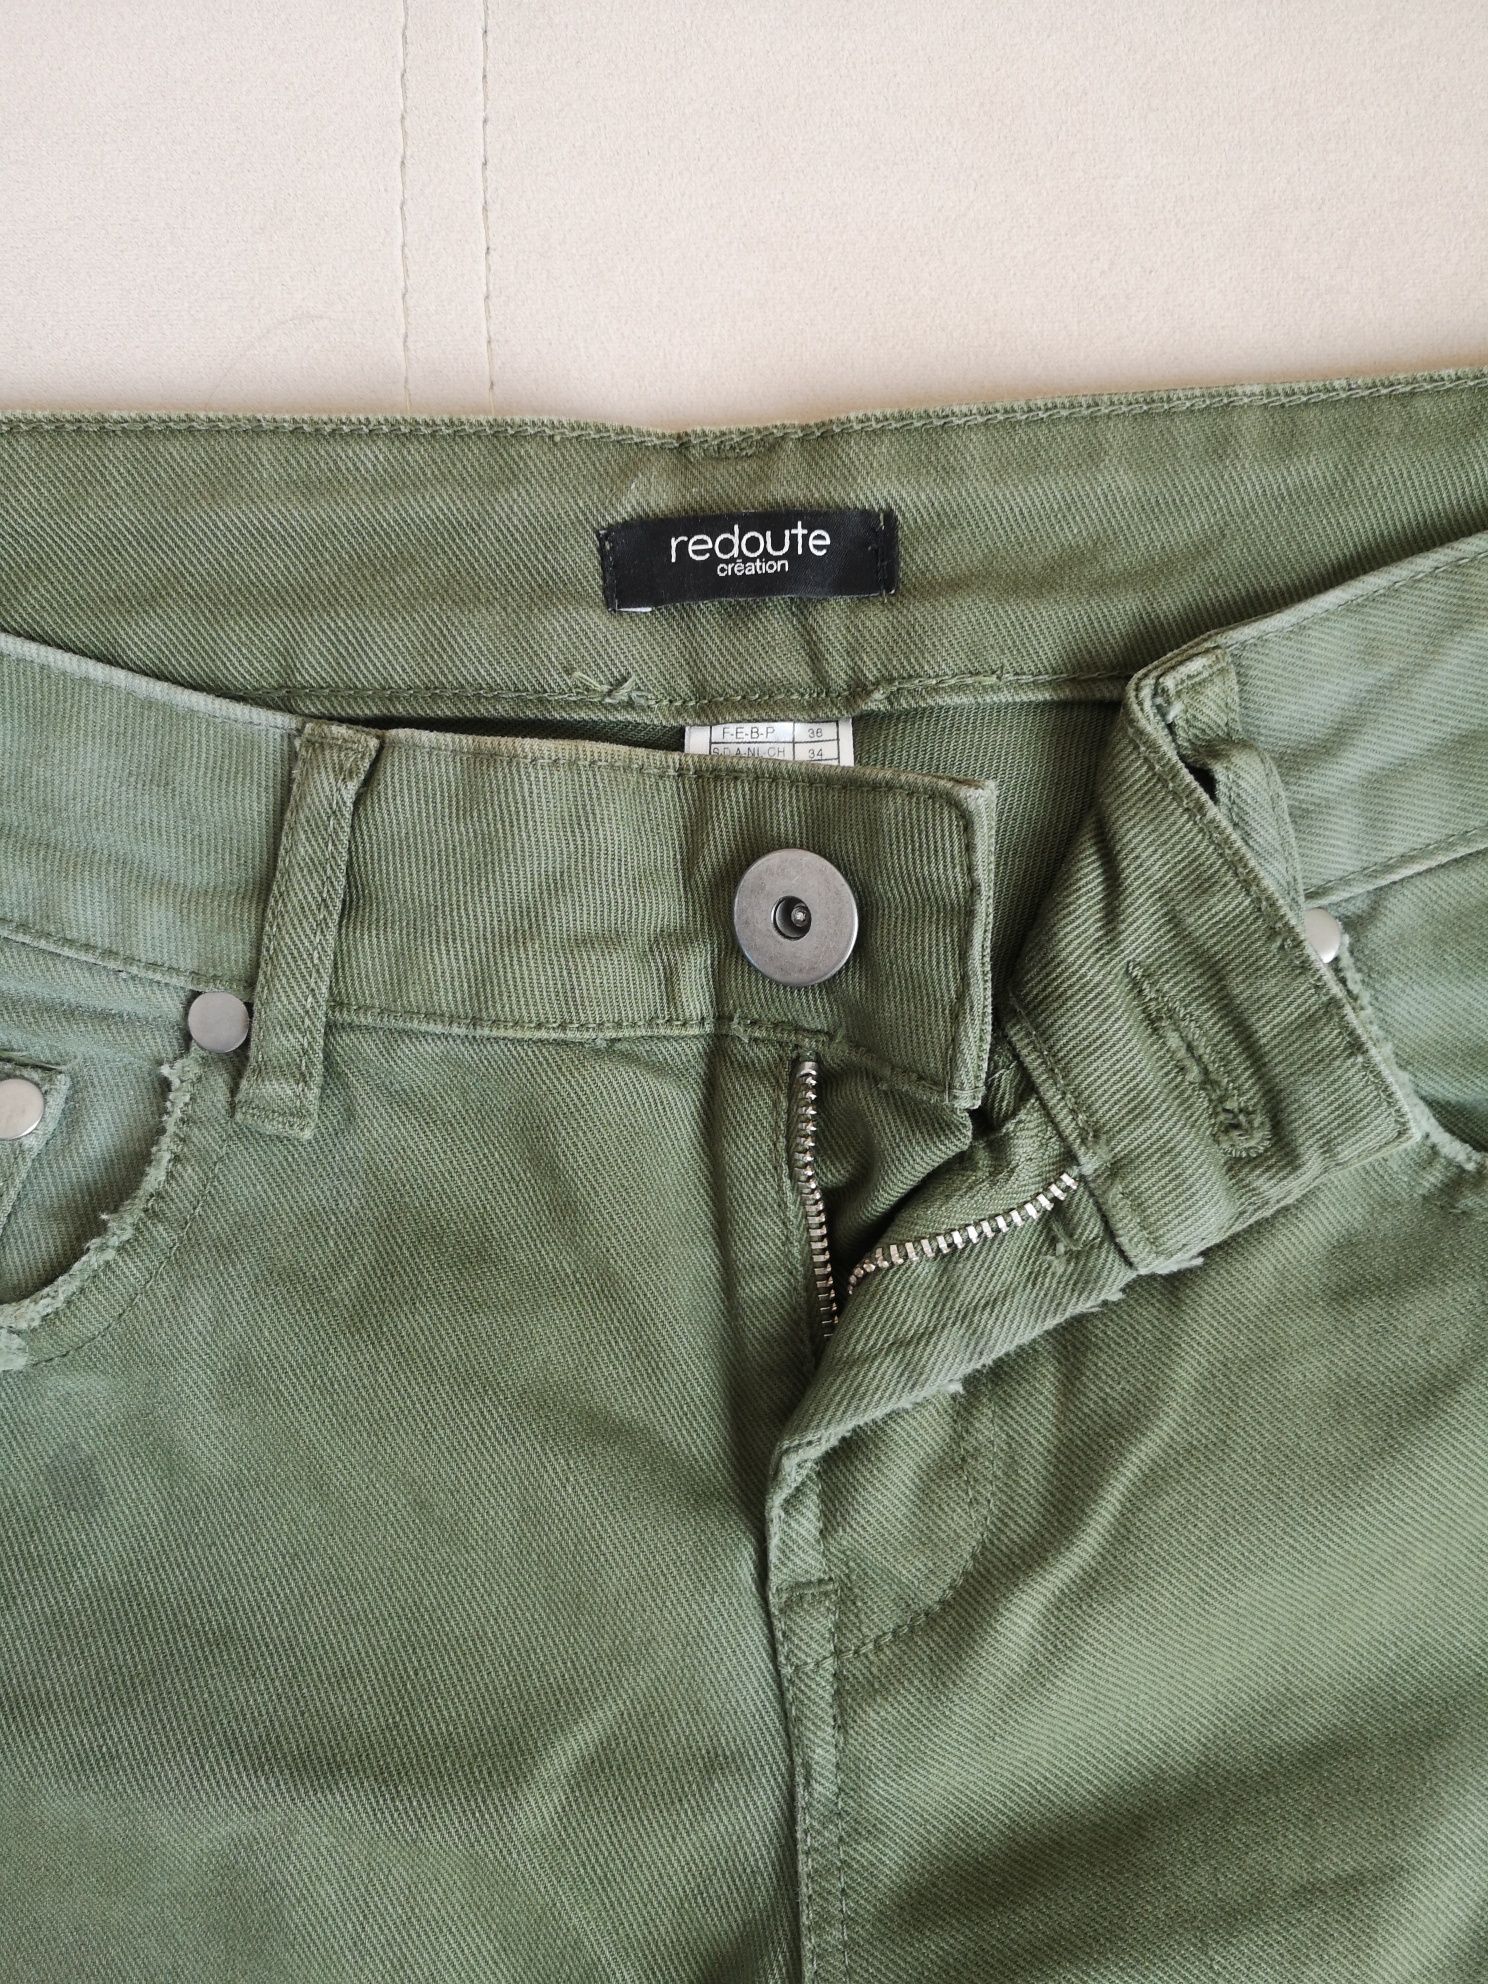 Spodnie jeansy damskie slim /36/khaki cieniowane /Redoute